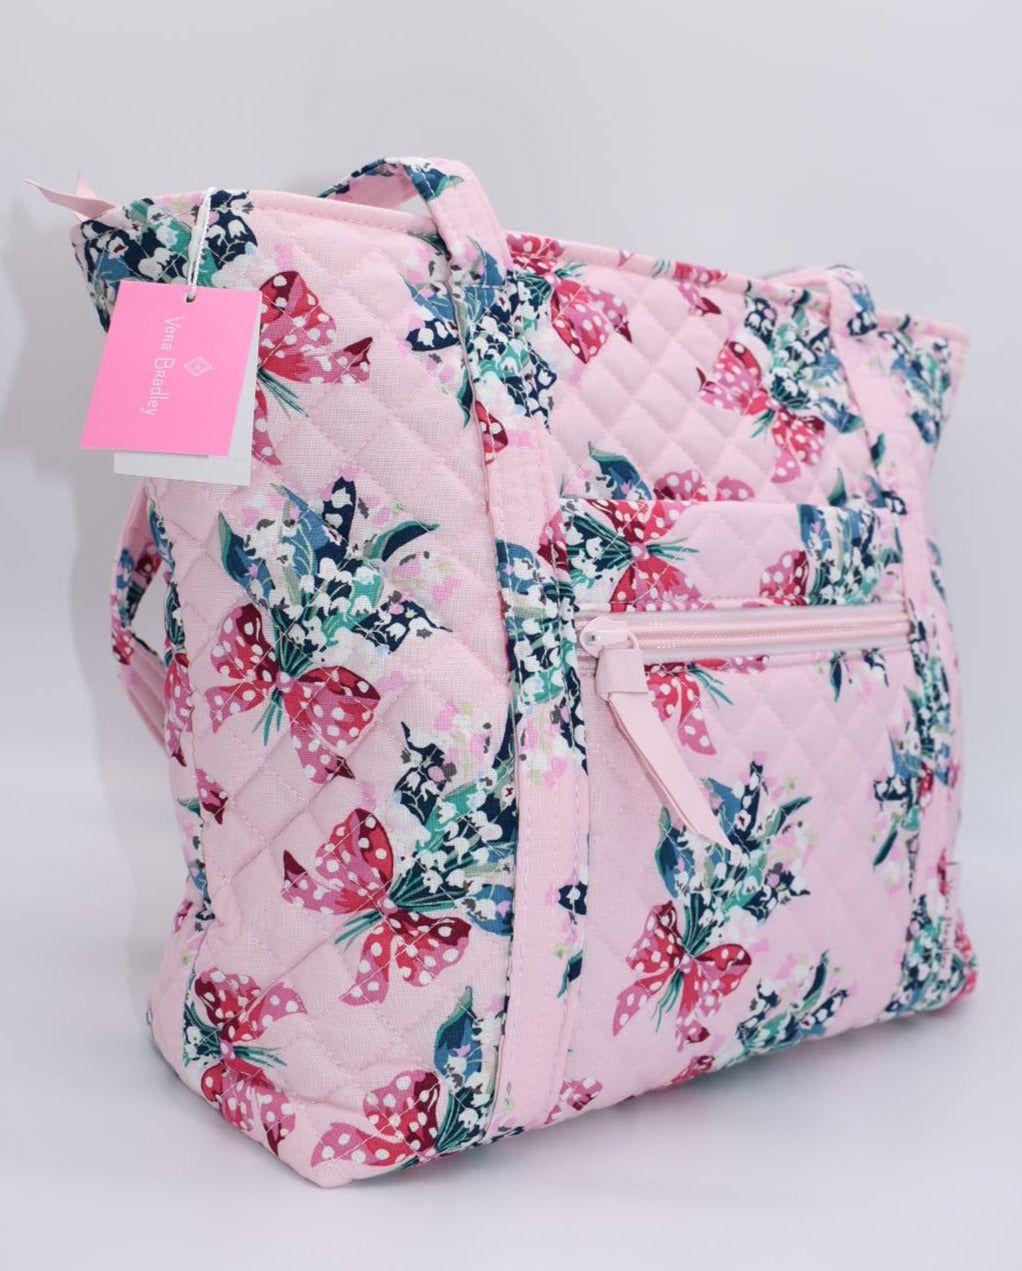 Vera Bradley Small Vera Tote Bag in "Happiness Returns Pink" Pattern